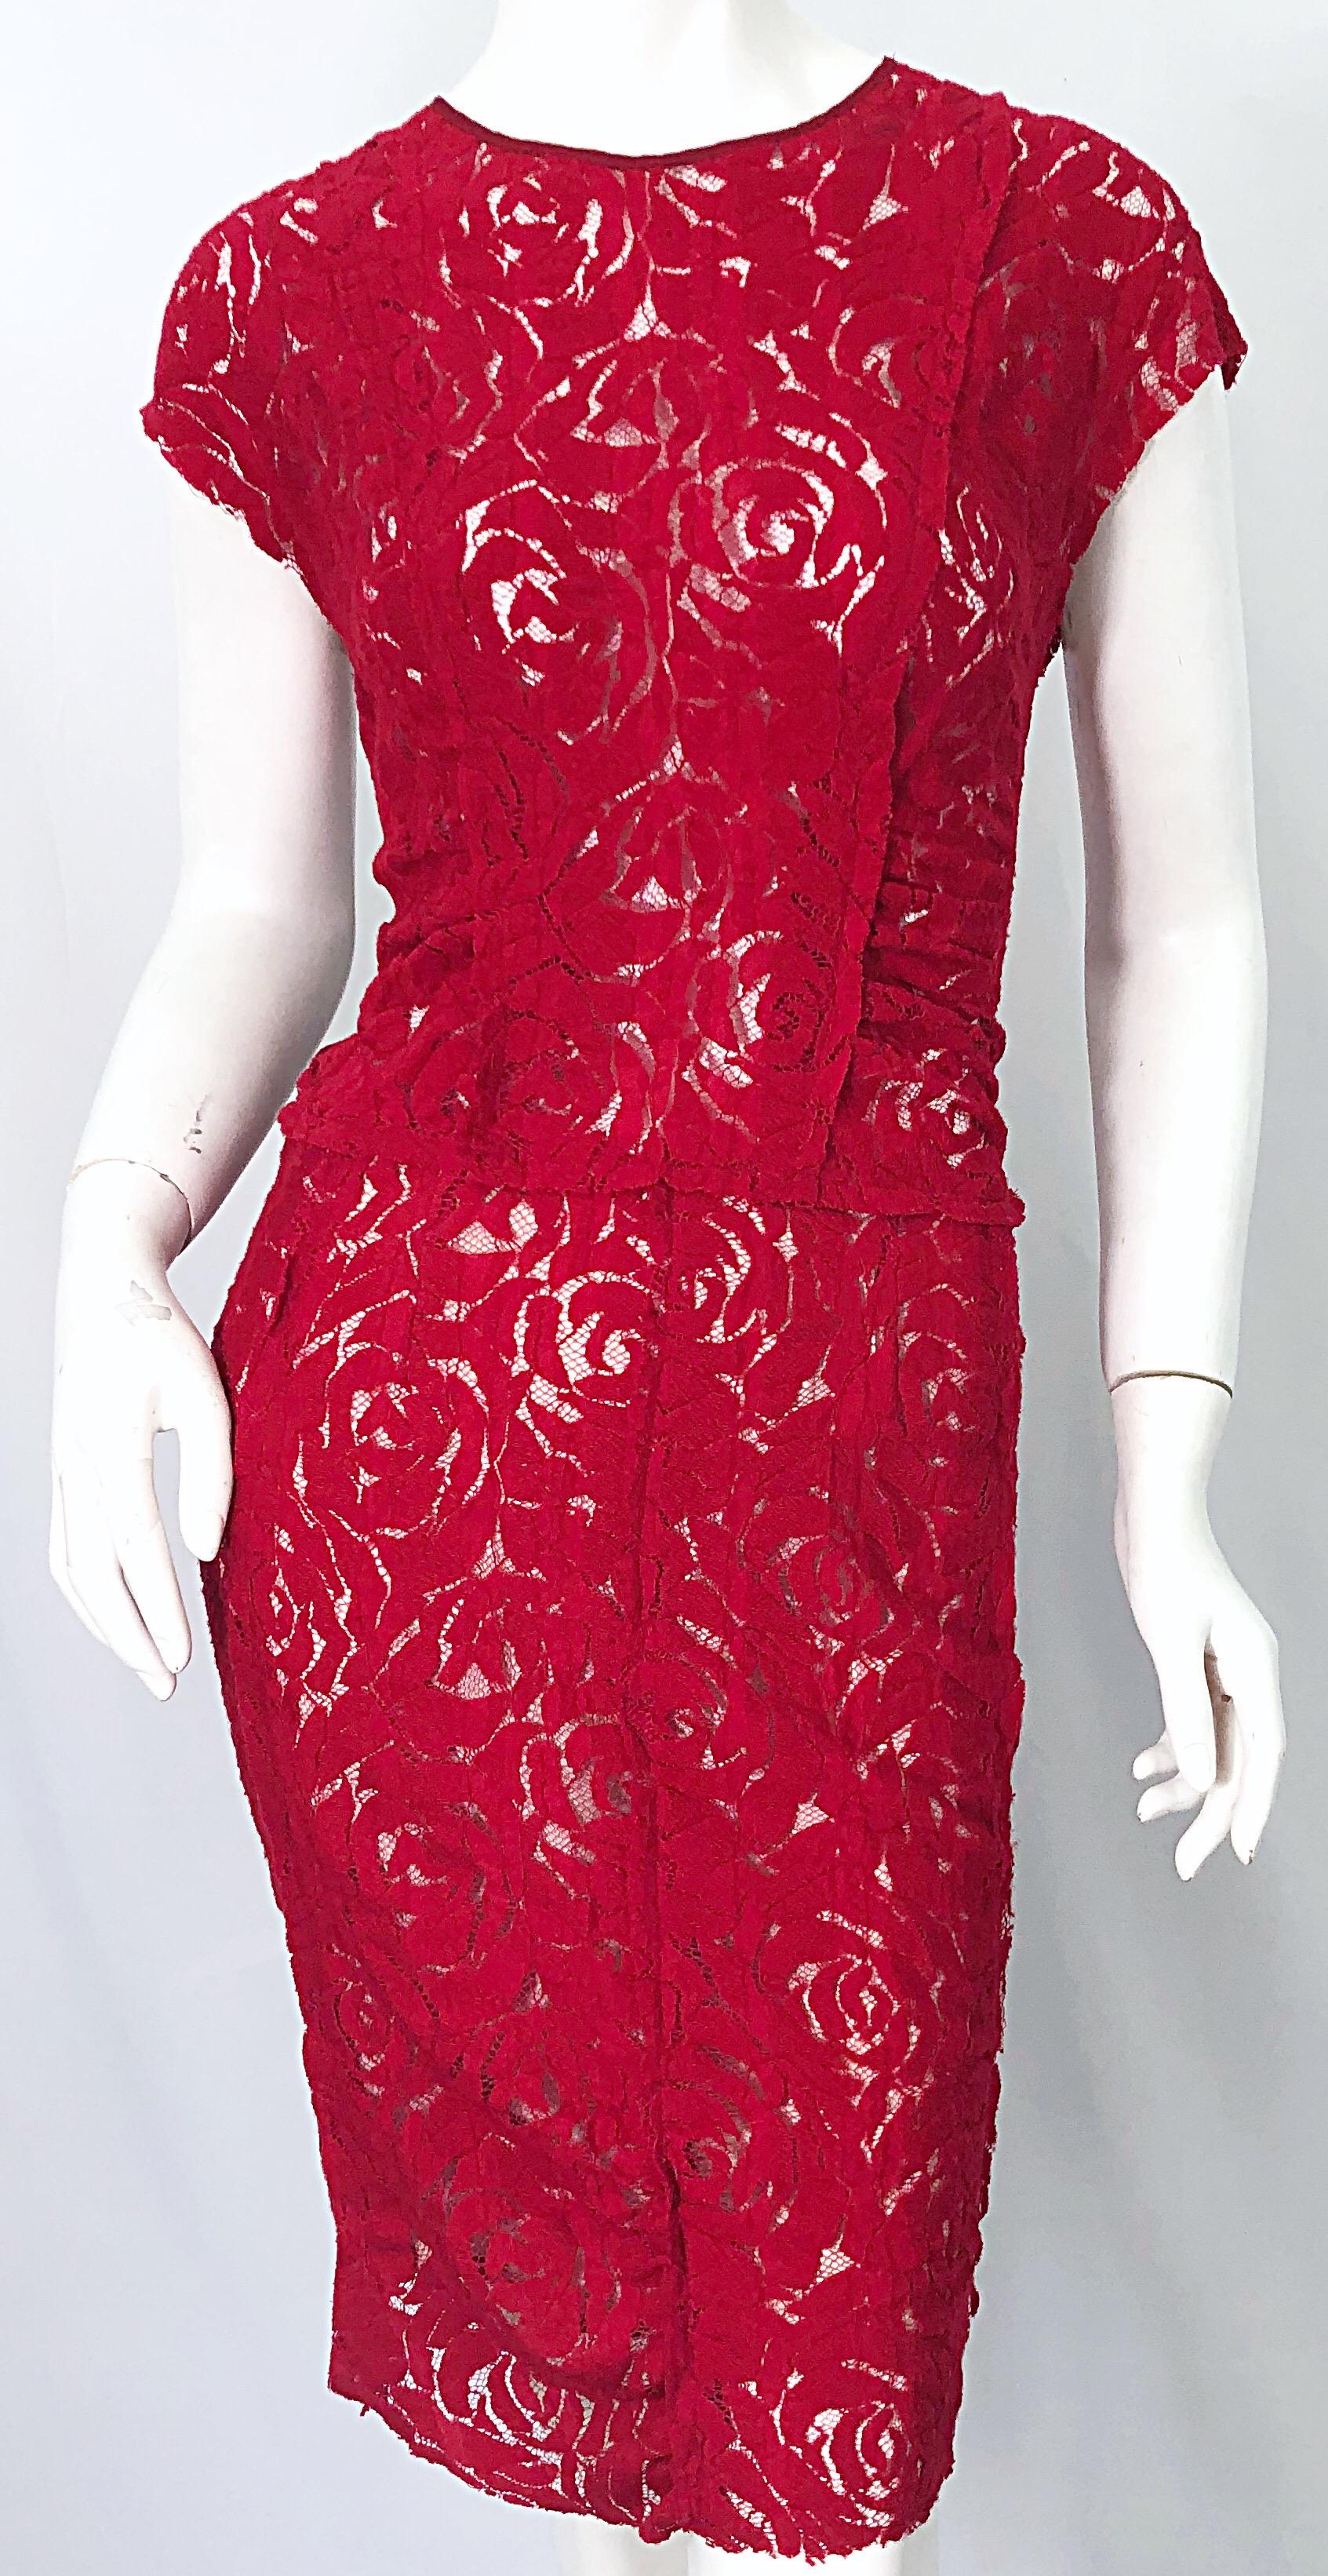 Women's Nina Ricci 2000s Lipstick Red Lace Size 42 ( 8 ) Short Sleeve Vintage Dress For Sale